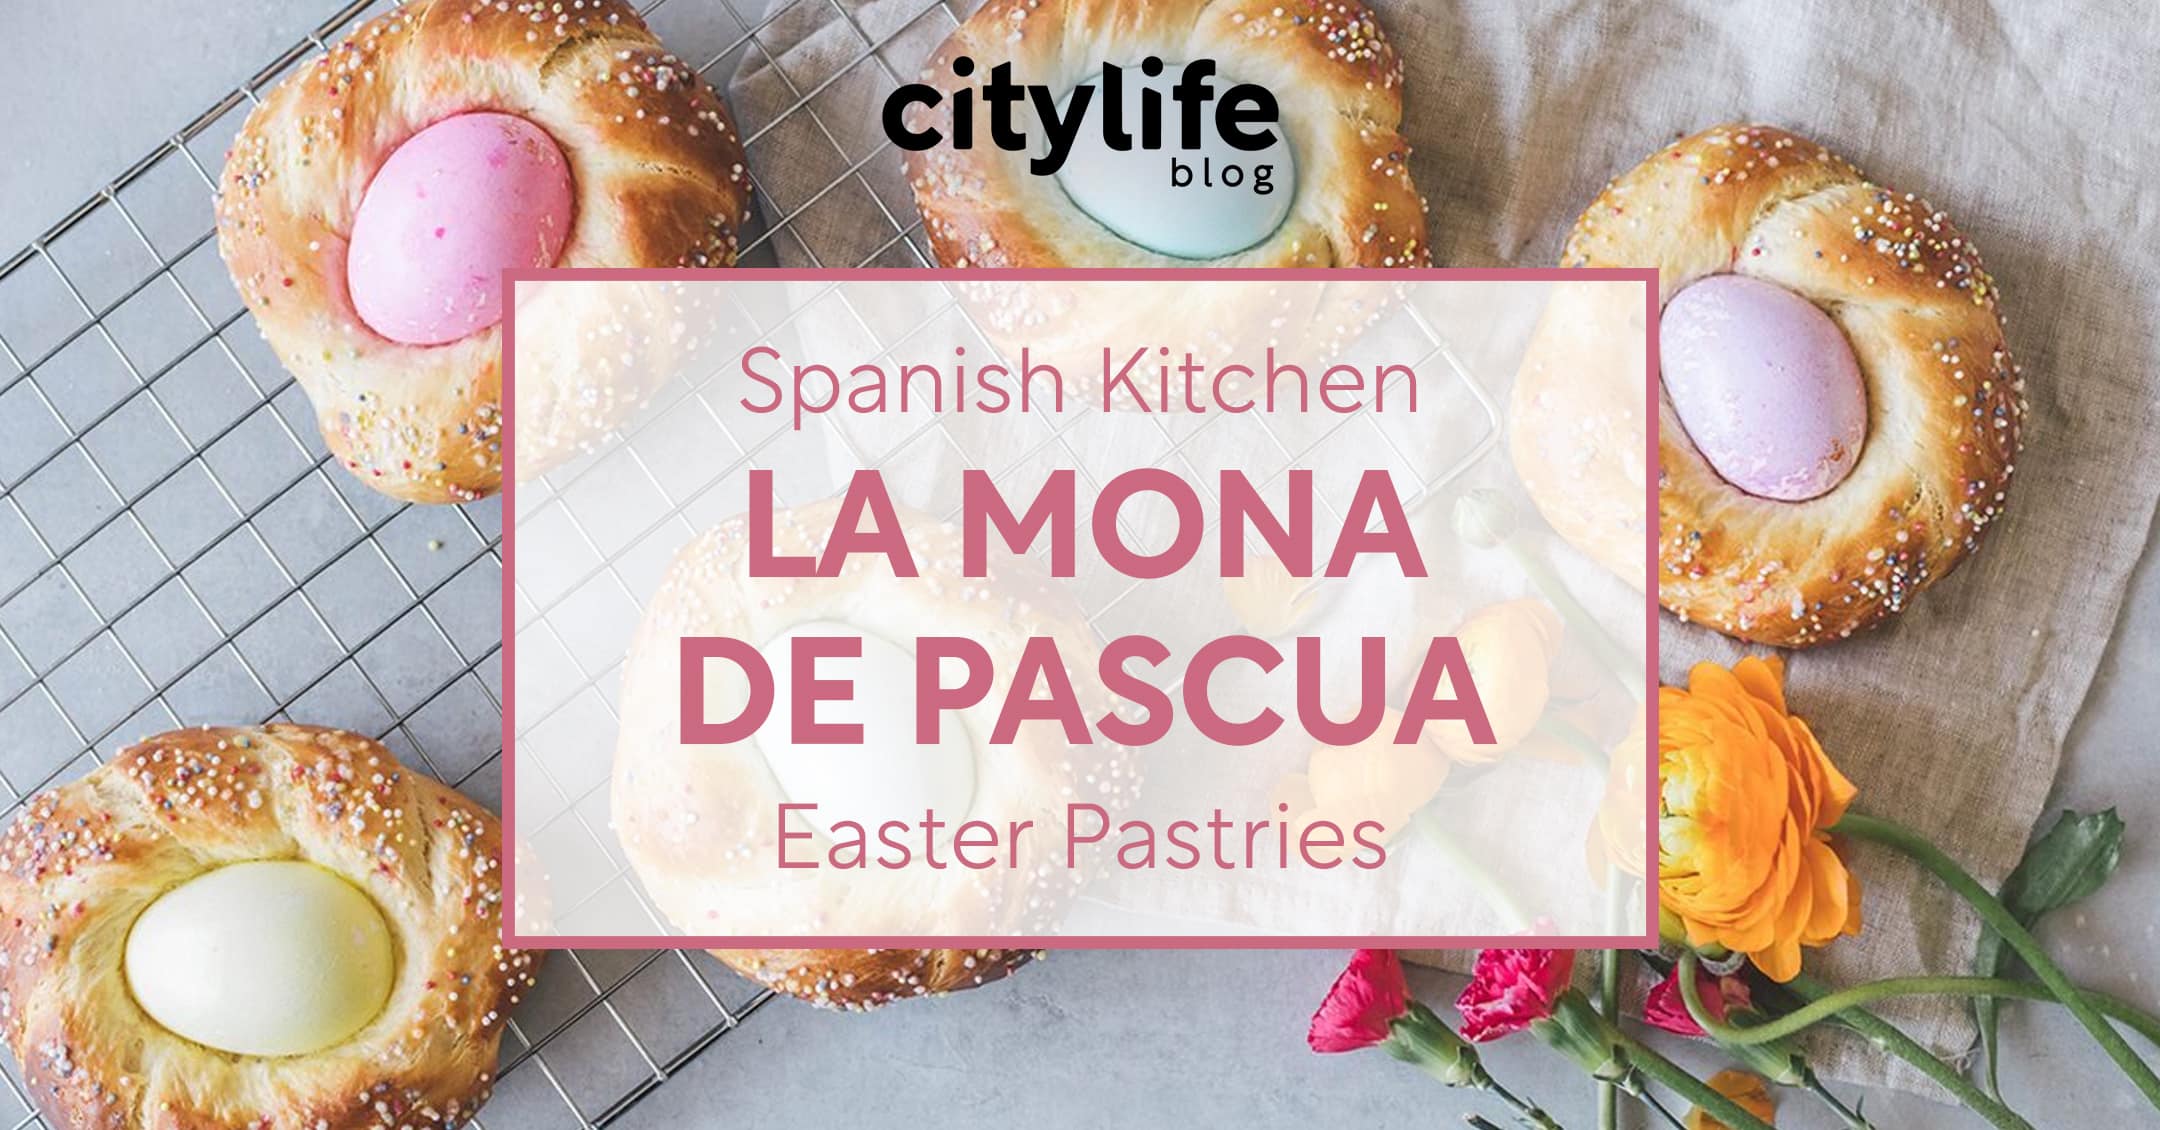 https://www.citylifemadrid.com/wp-content/uploads/2022/08/featured-image-la-mona-de-pascua-spanish-kitchen-cuisine-citylife-madrid.jpg